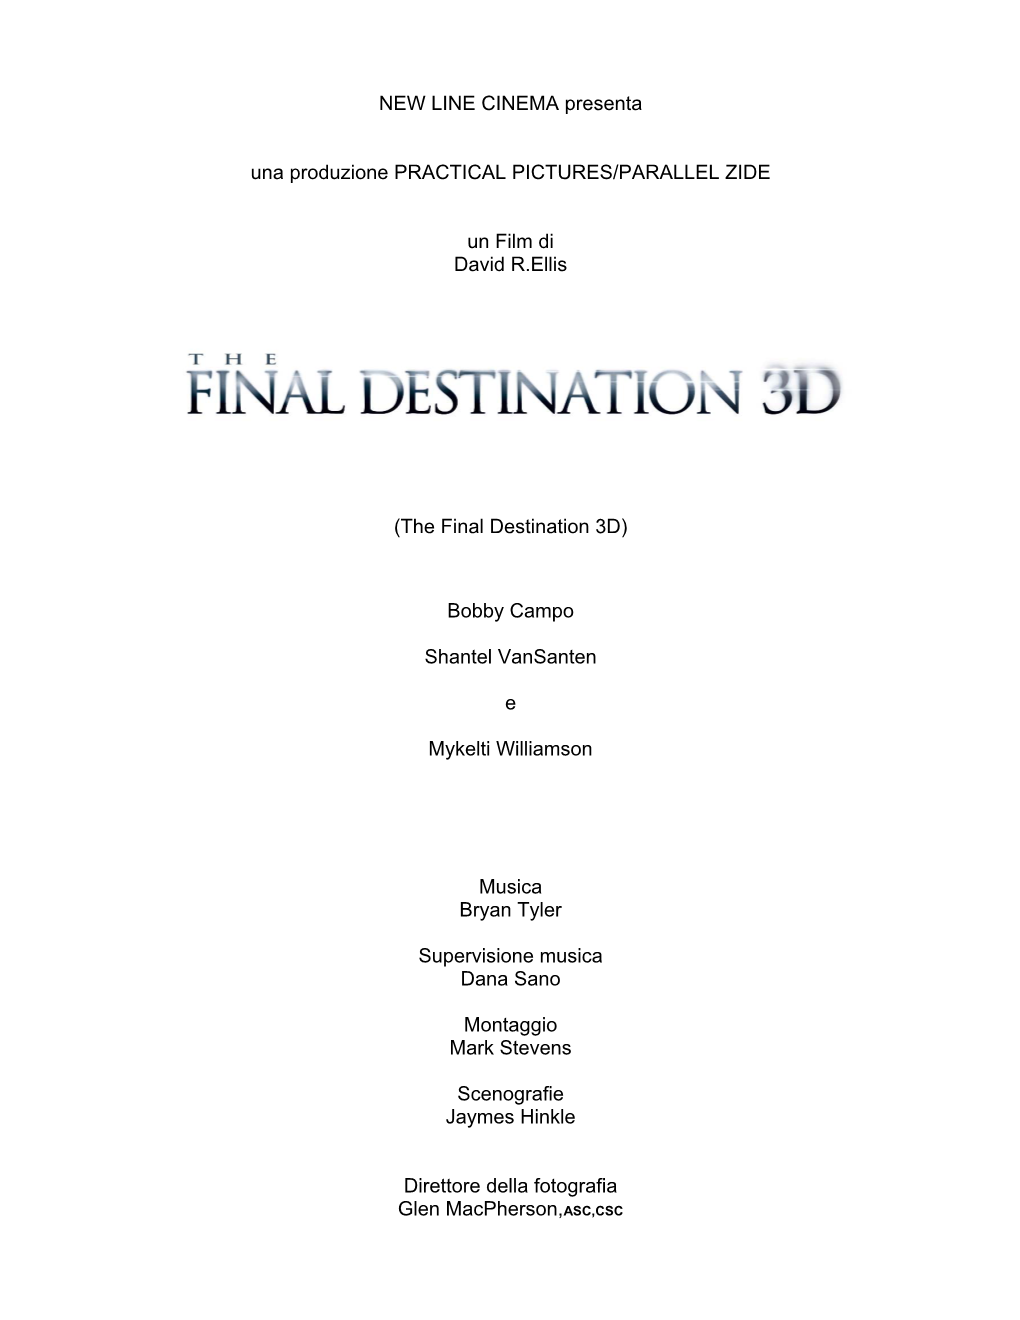 NEW LINE CINEMA Presenta Una Produzione PRACTICAL PICTURES/PARALLEL ZIDE Un Film Di David R.Ellis (The Final Destination 3D) Bo